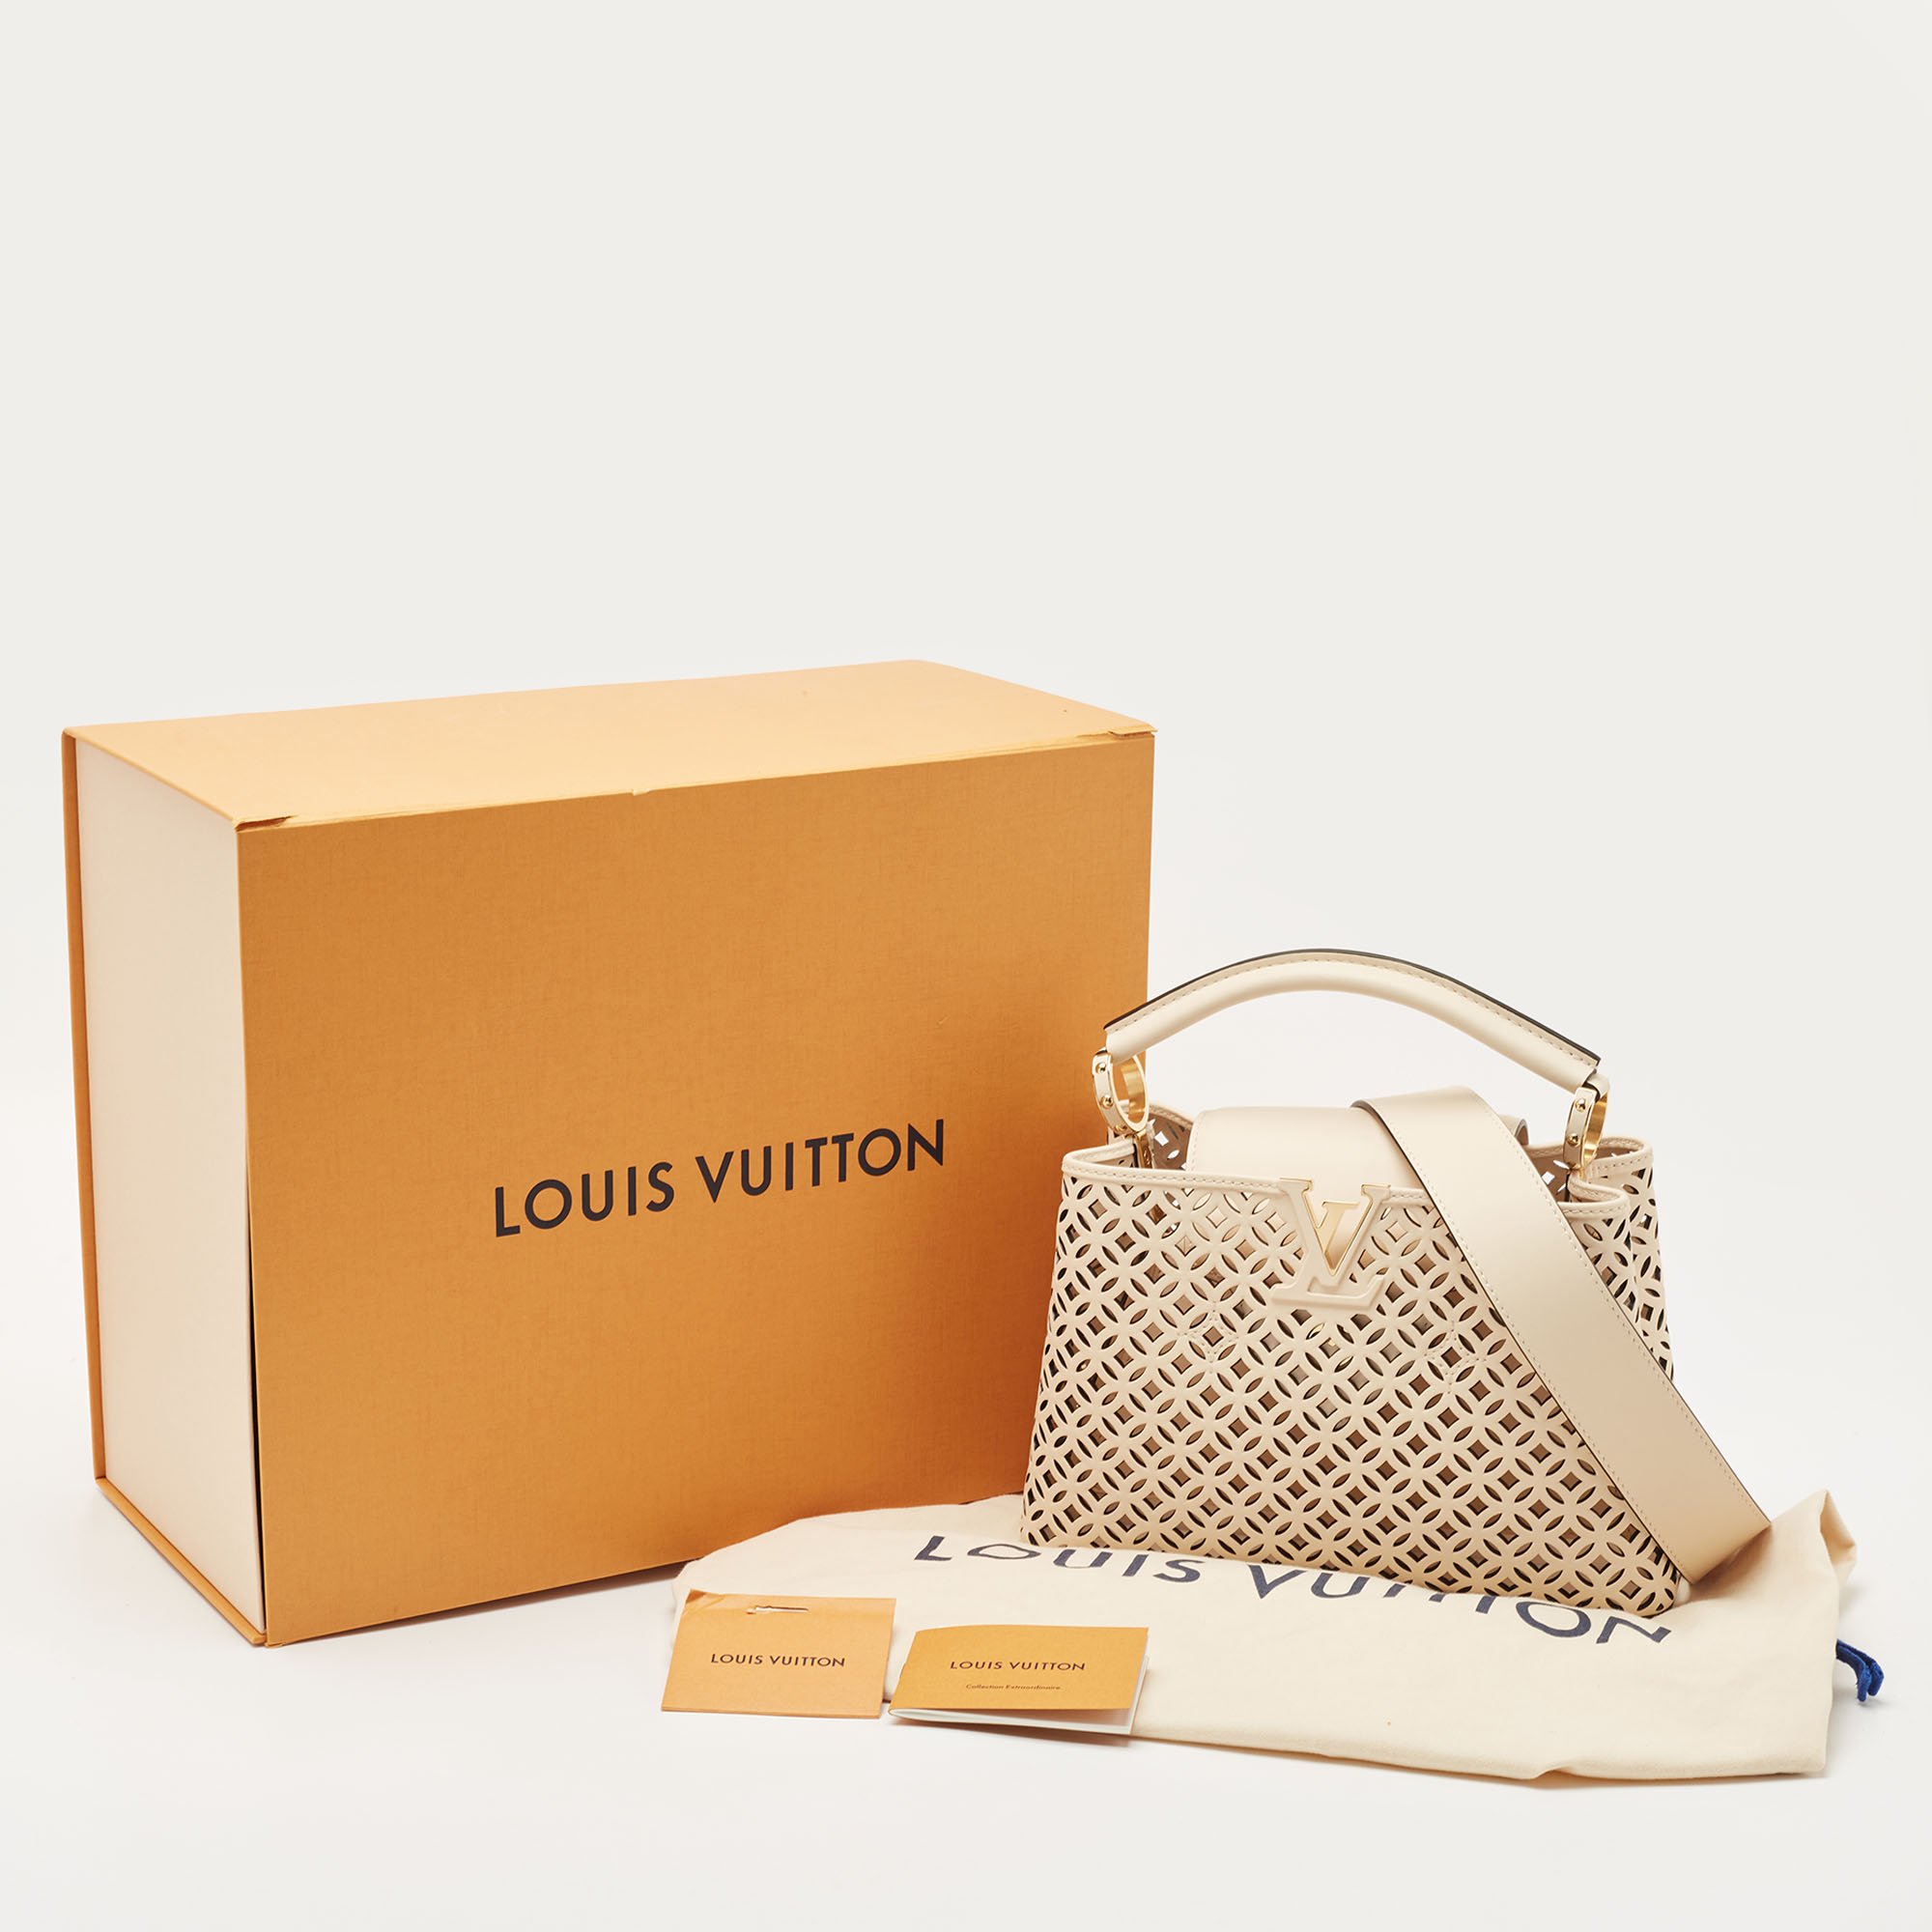 M55011 Louis Vuitton LV capucines PM BB woven handbag in bamboo rattan